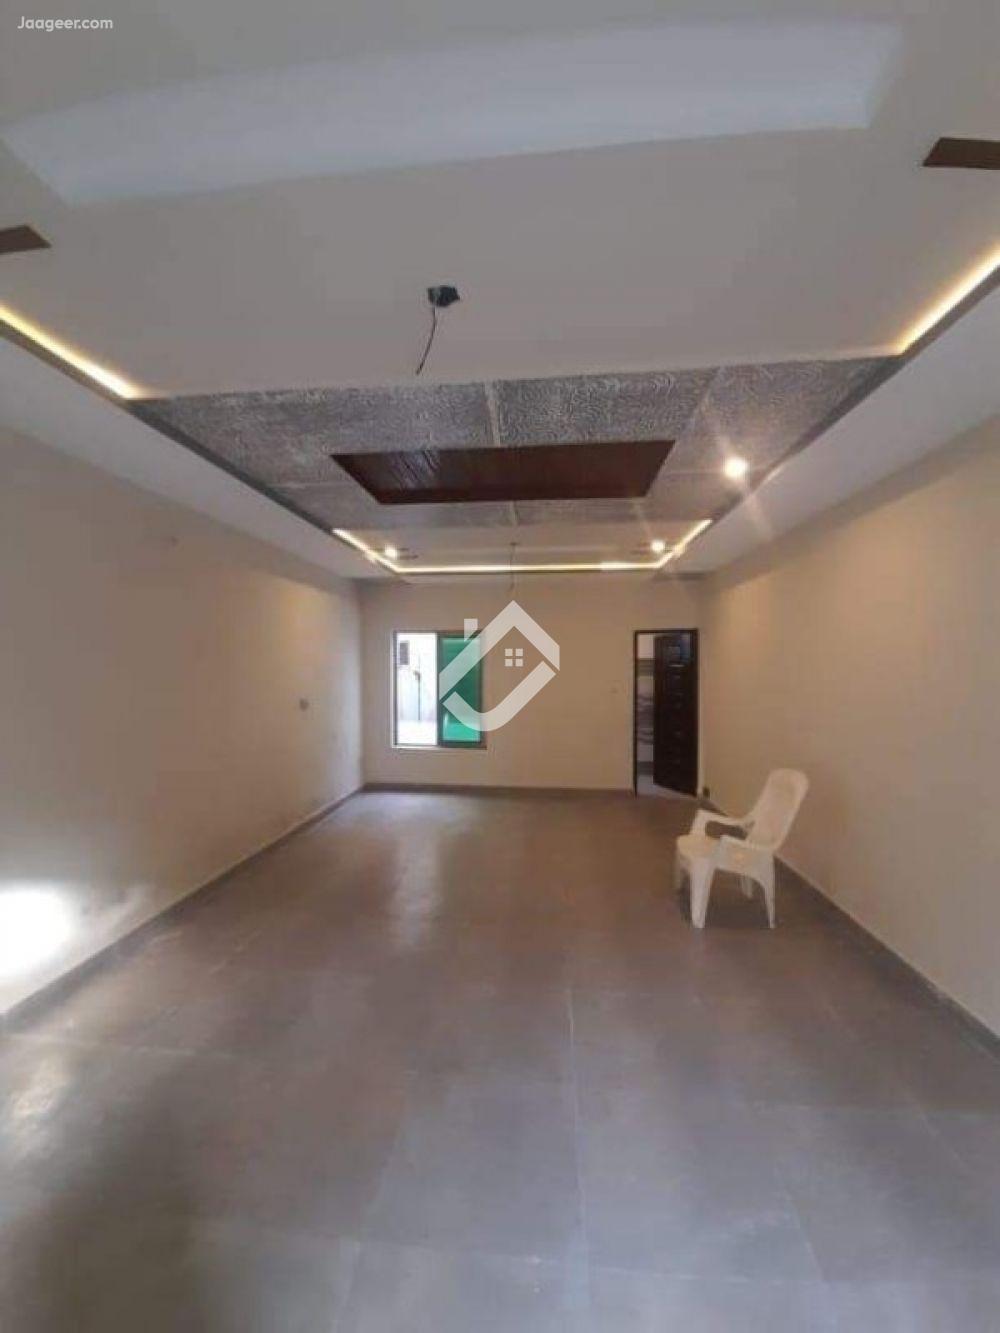 View  3 Marla Double Storey House For Sale In Khybane Naveed  in Khayaban E Naveed, Sargodha